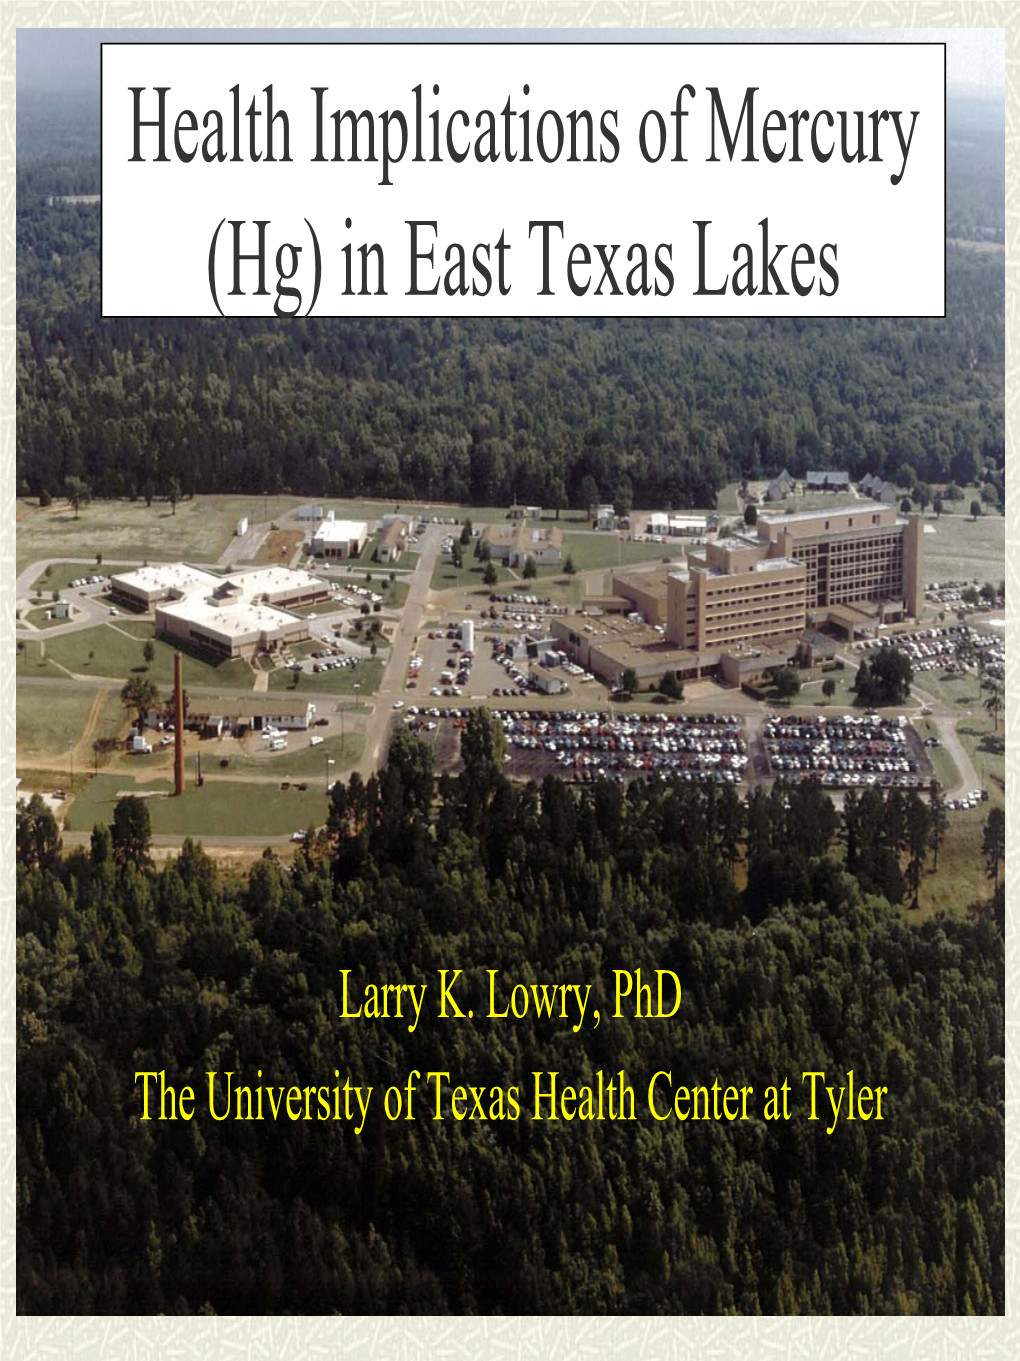 Health Implications of Mercury in East Texas Lakes